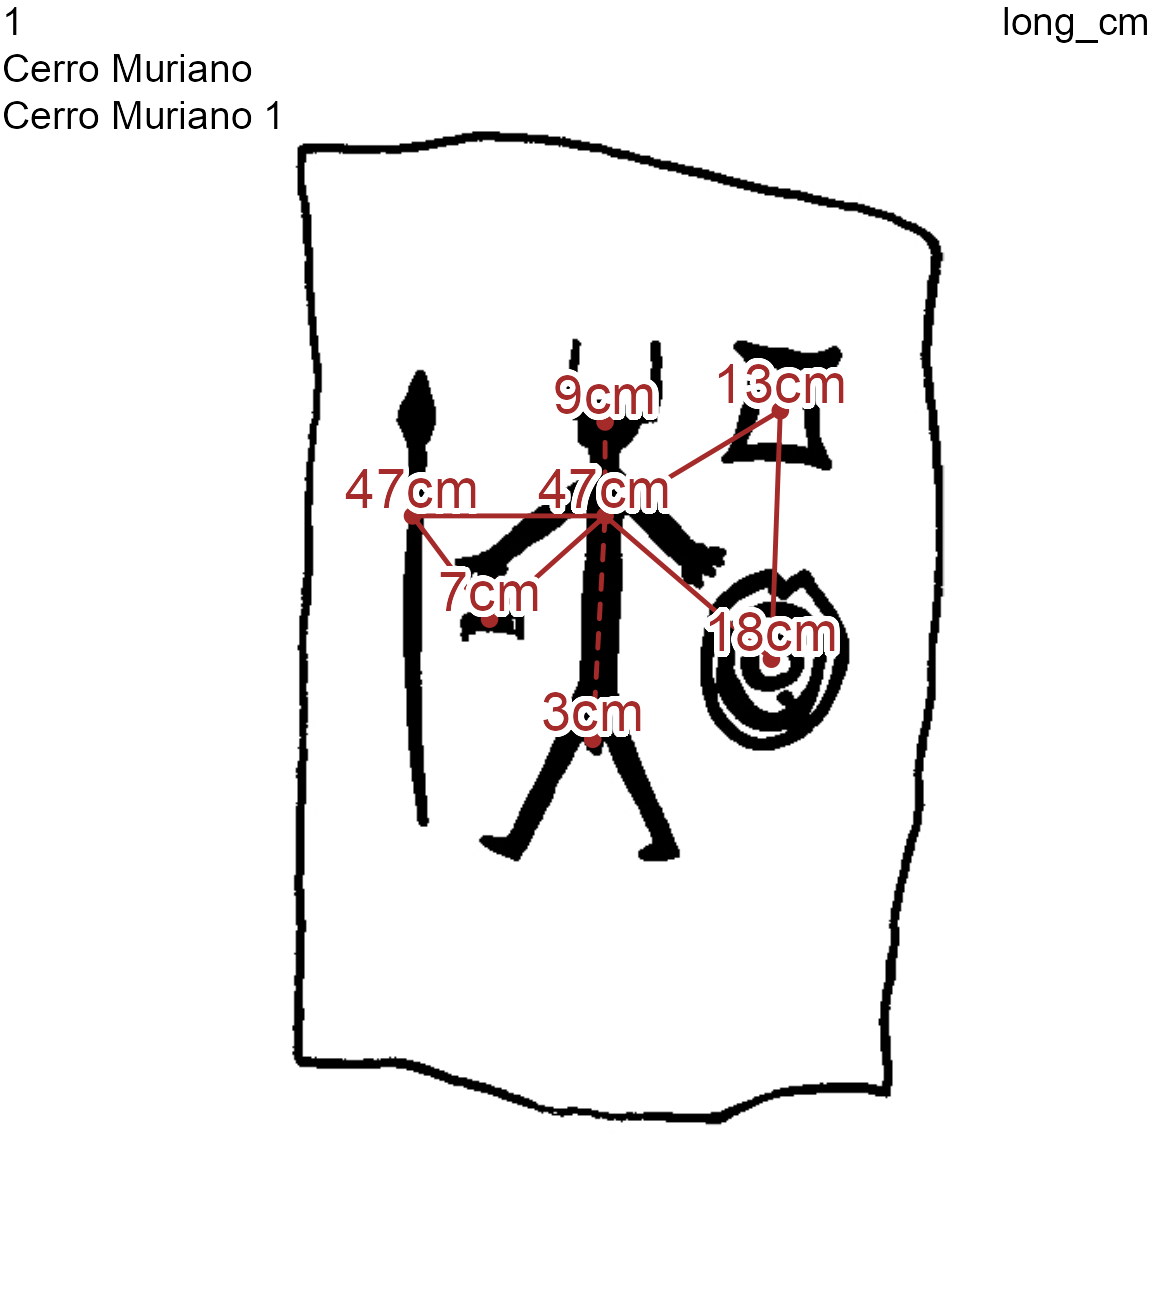 Cerro Muriano 1 stelae (decoration 1) with the maximum length (in cm) of each GU